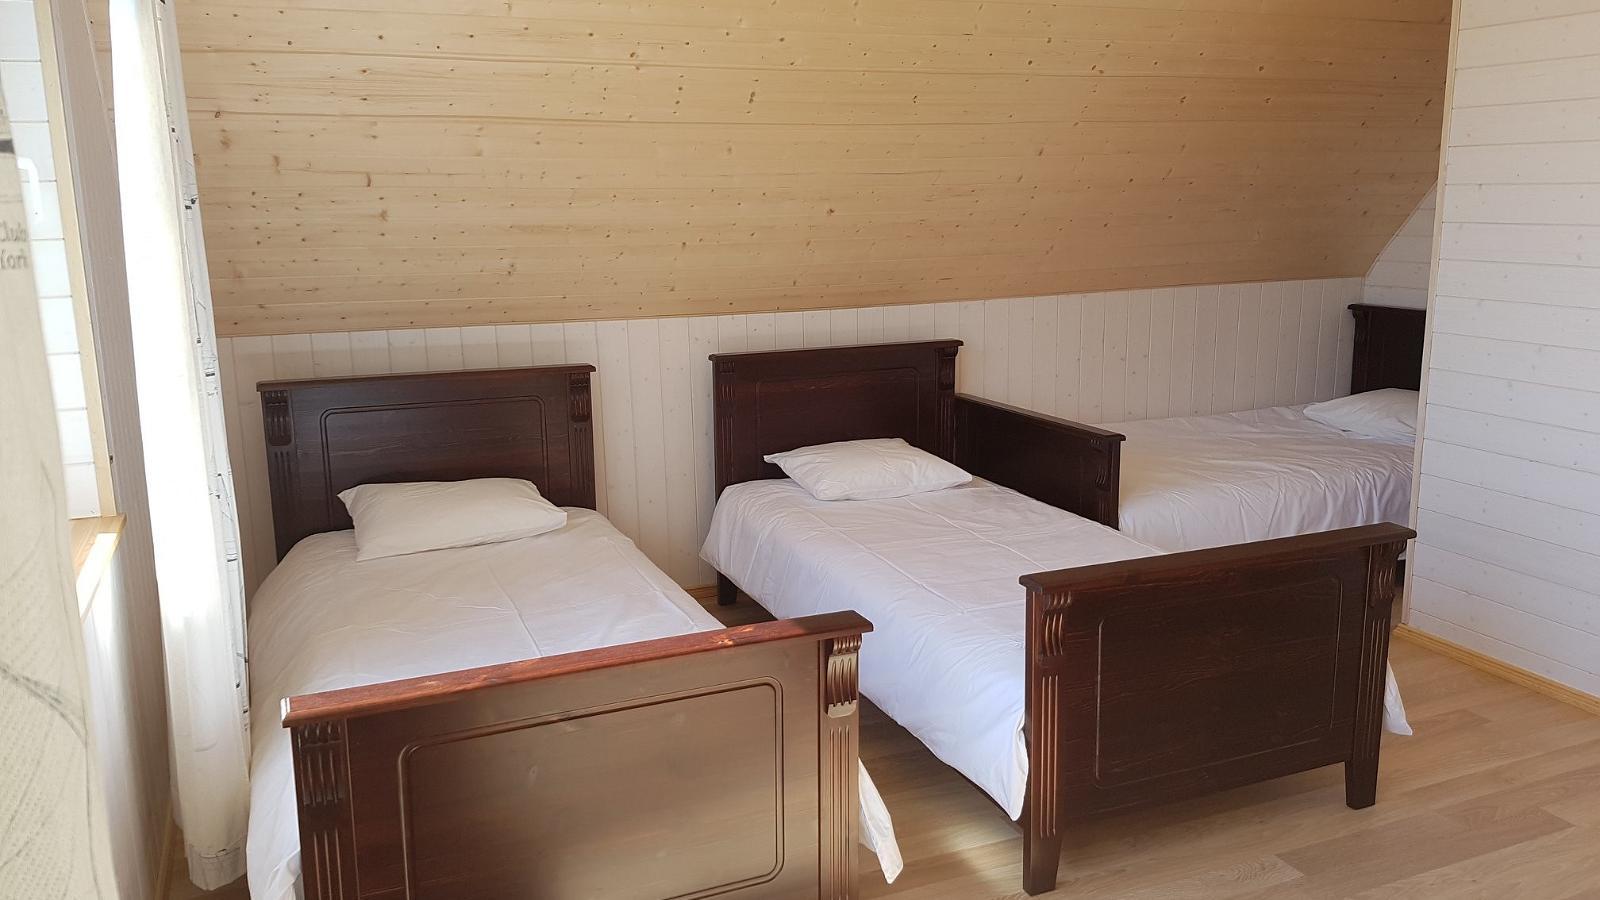 Risti Farm accommodation in Kihnu